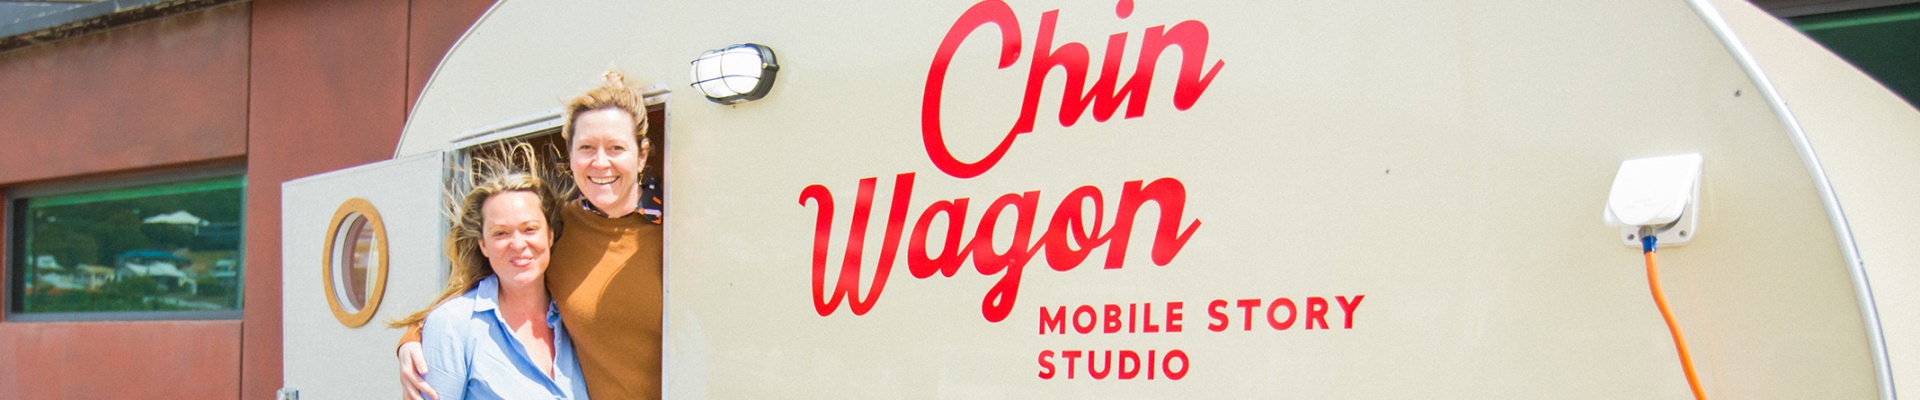 The Chin Wagon Mobile Story Stido